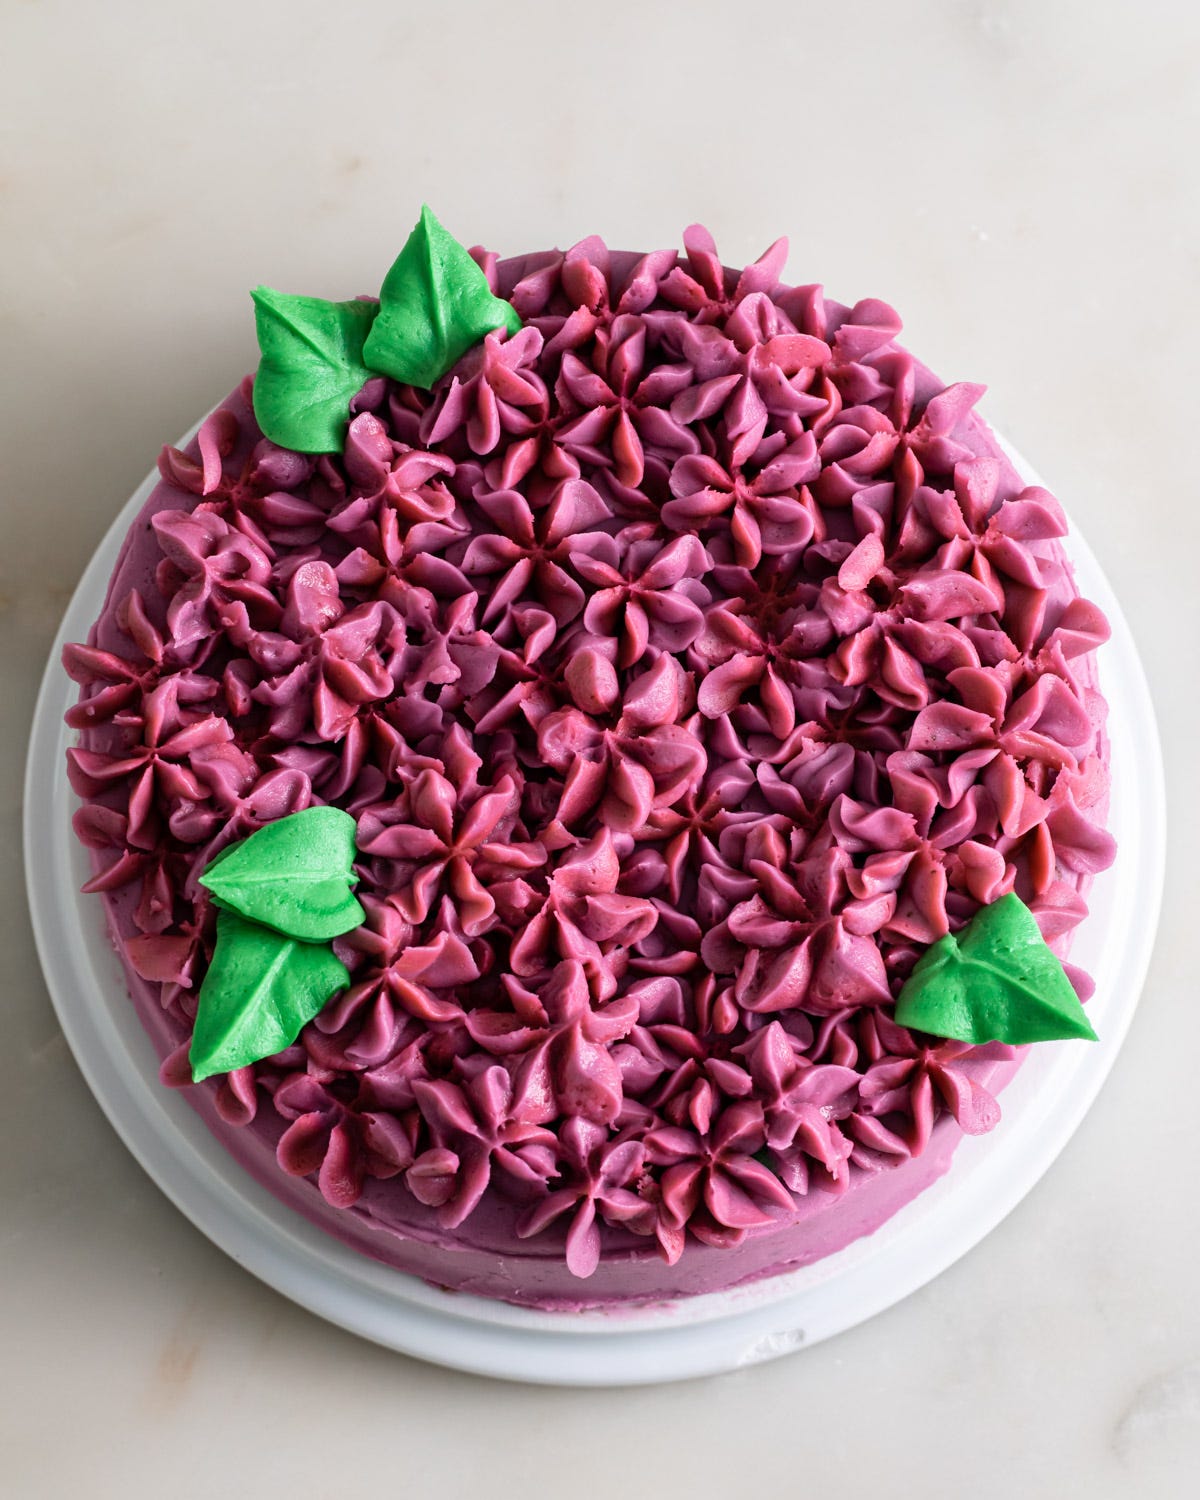 Hydrangea Wedding Cake Tutorial - A Decorating Guide | Decorated Treats